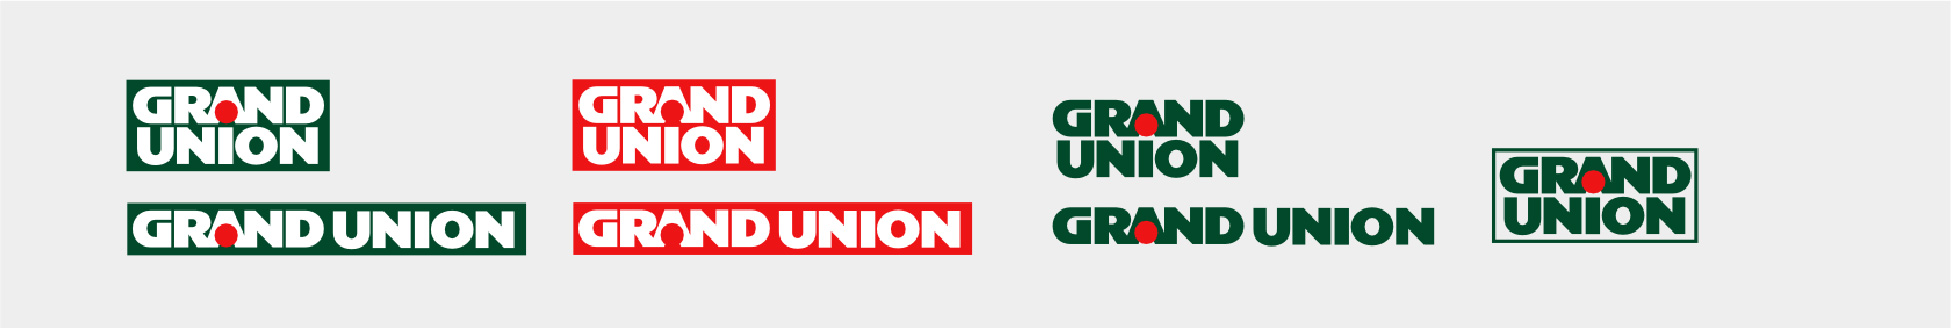 branding grand union 